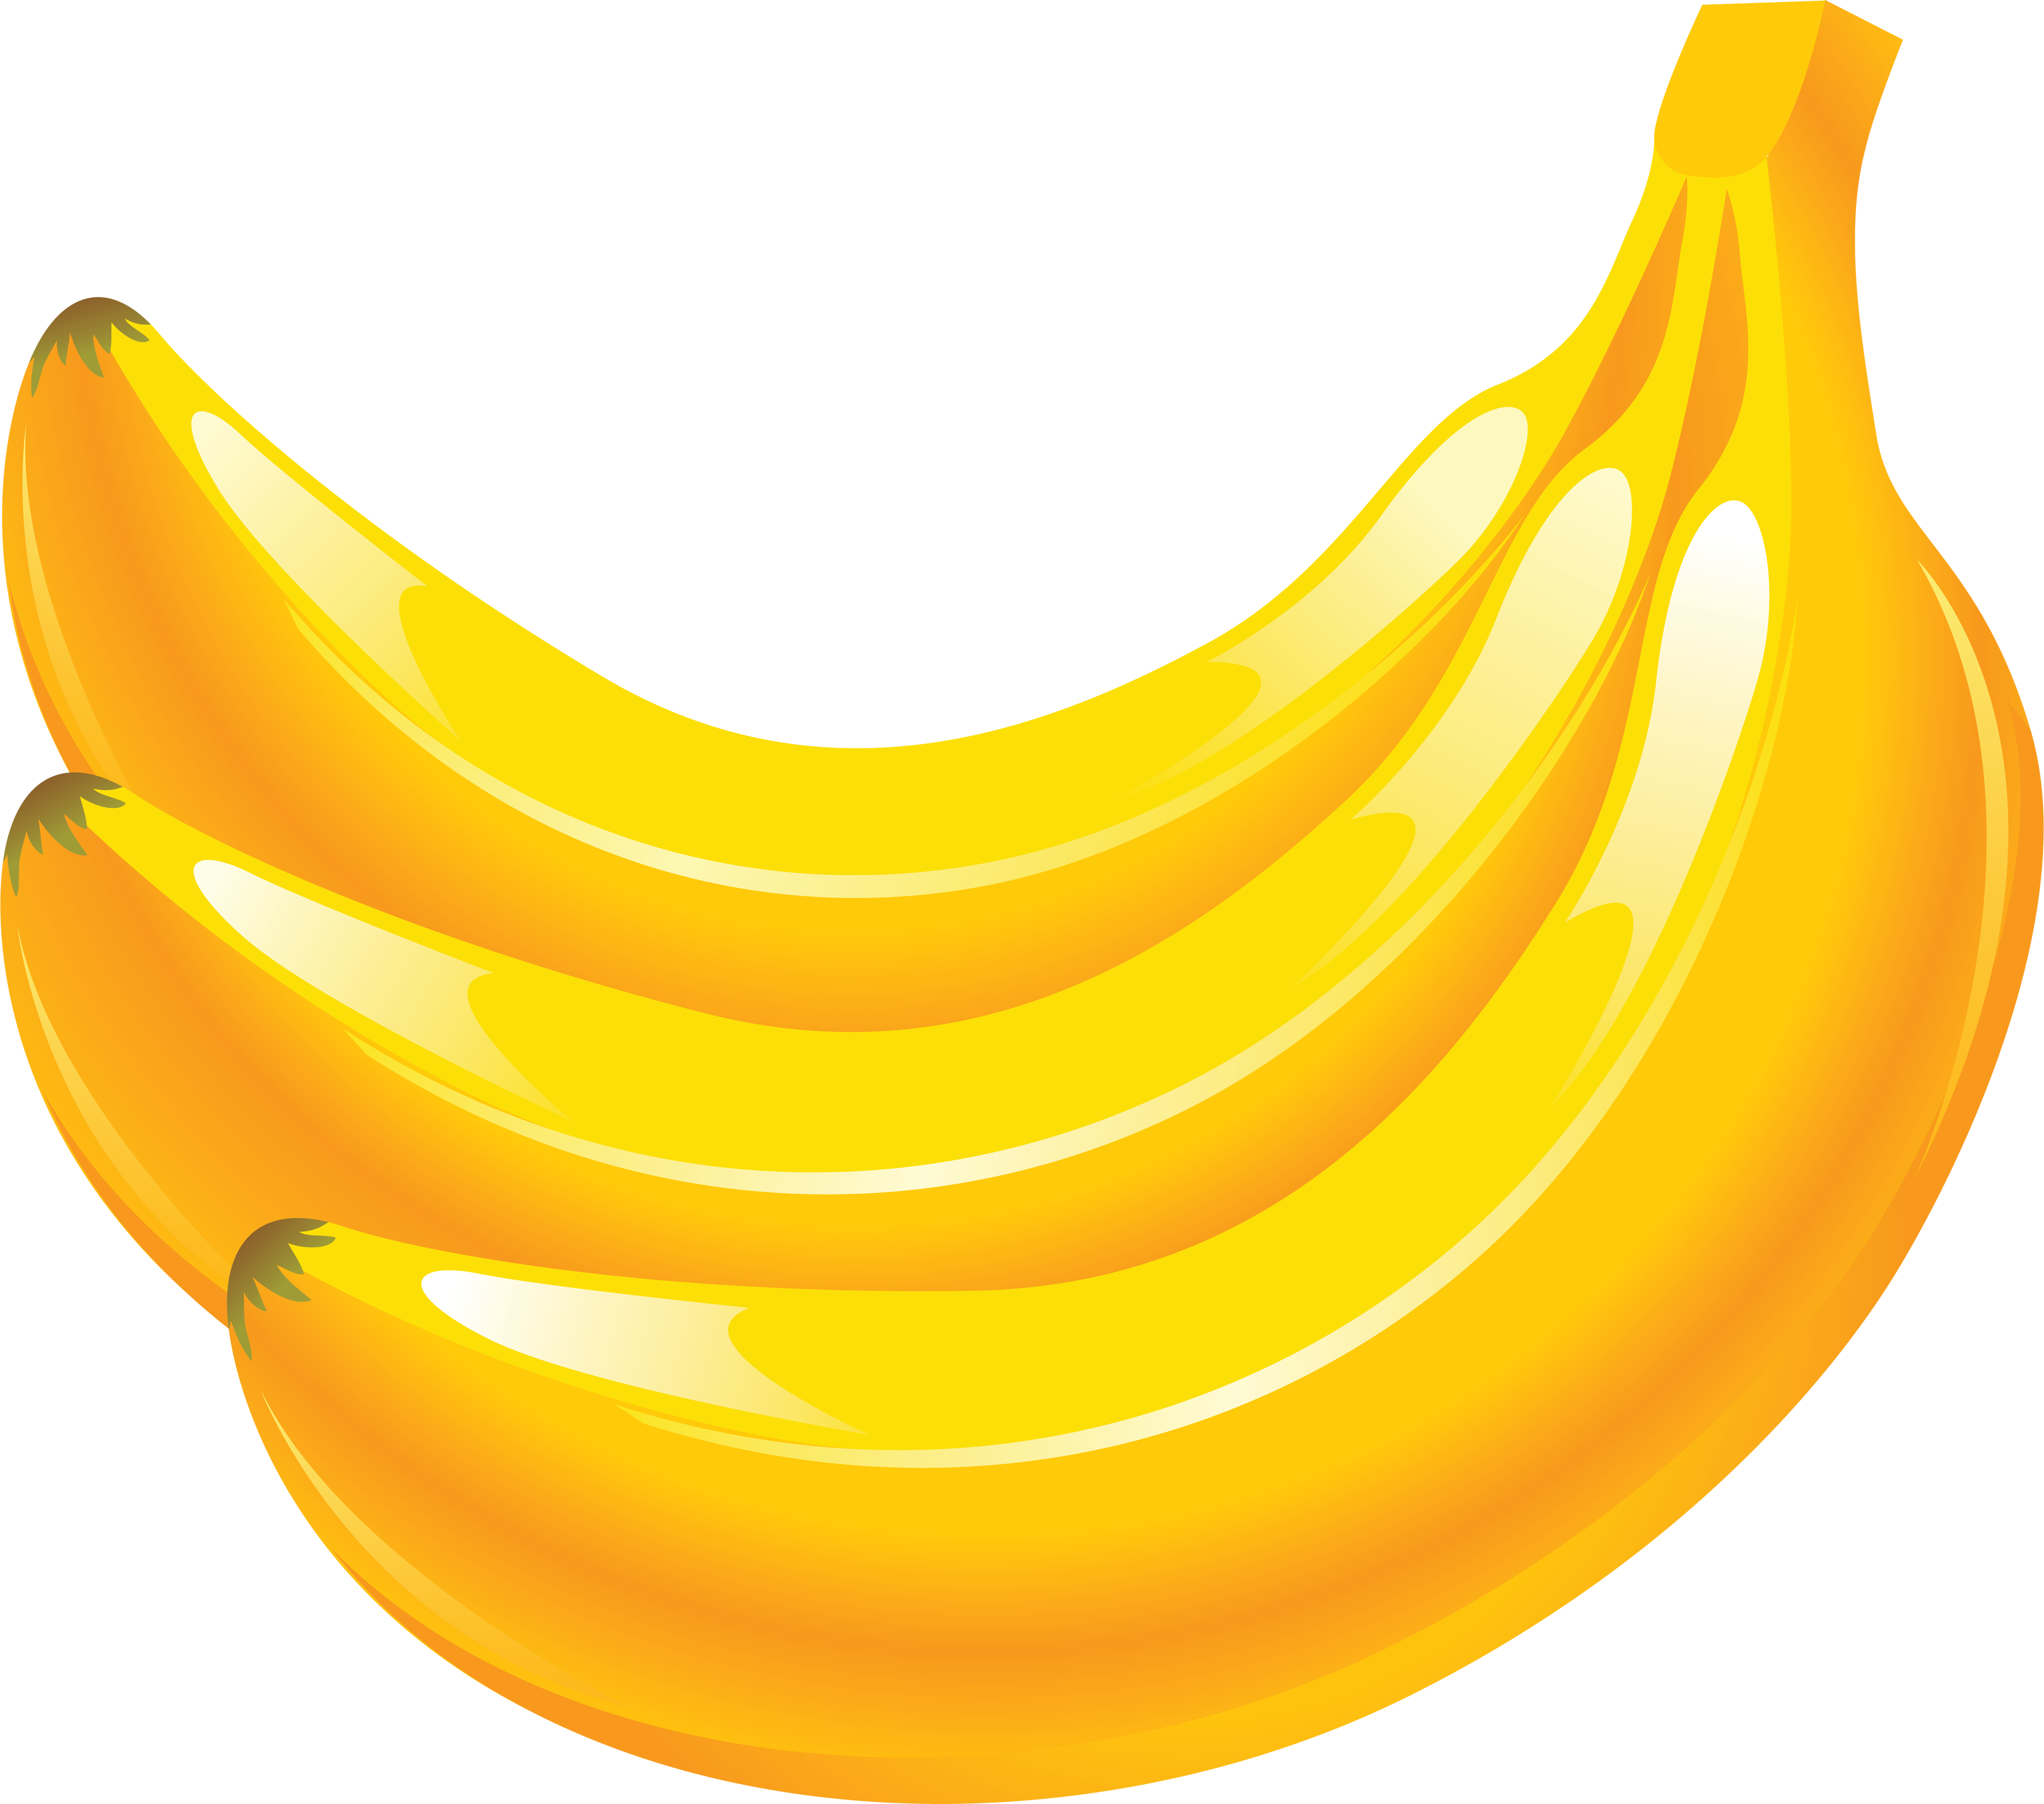 Banana clip art 6